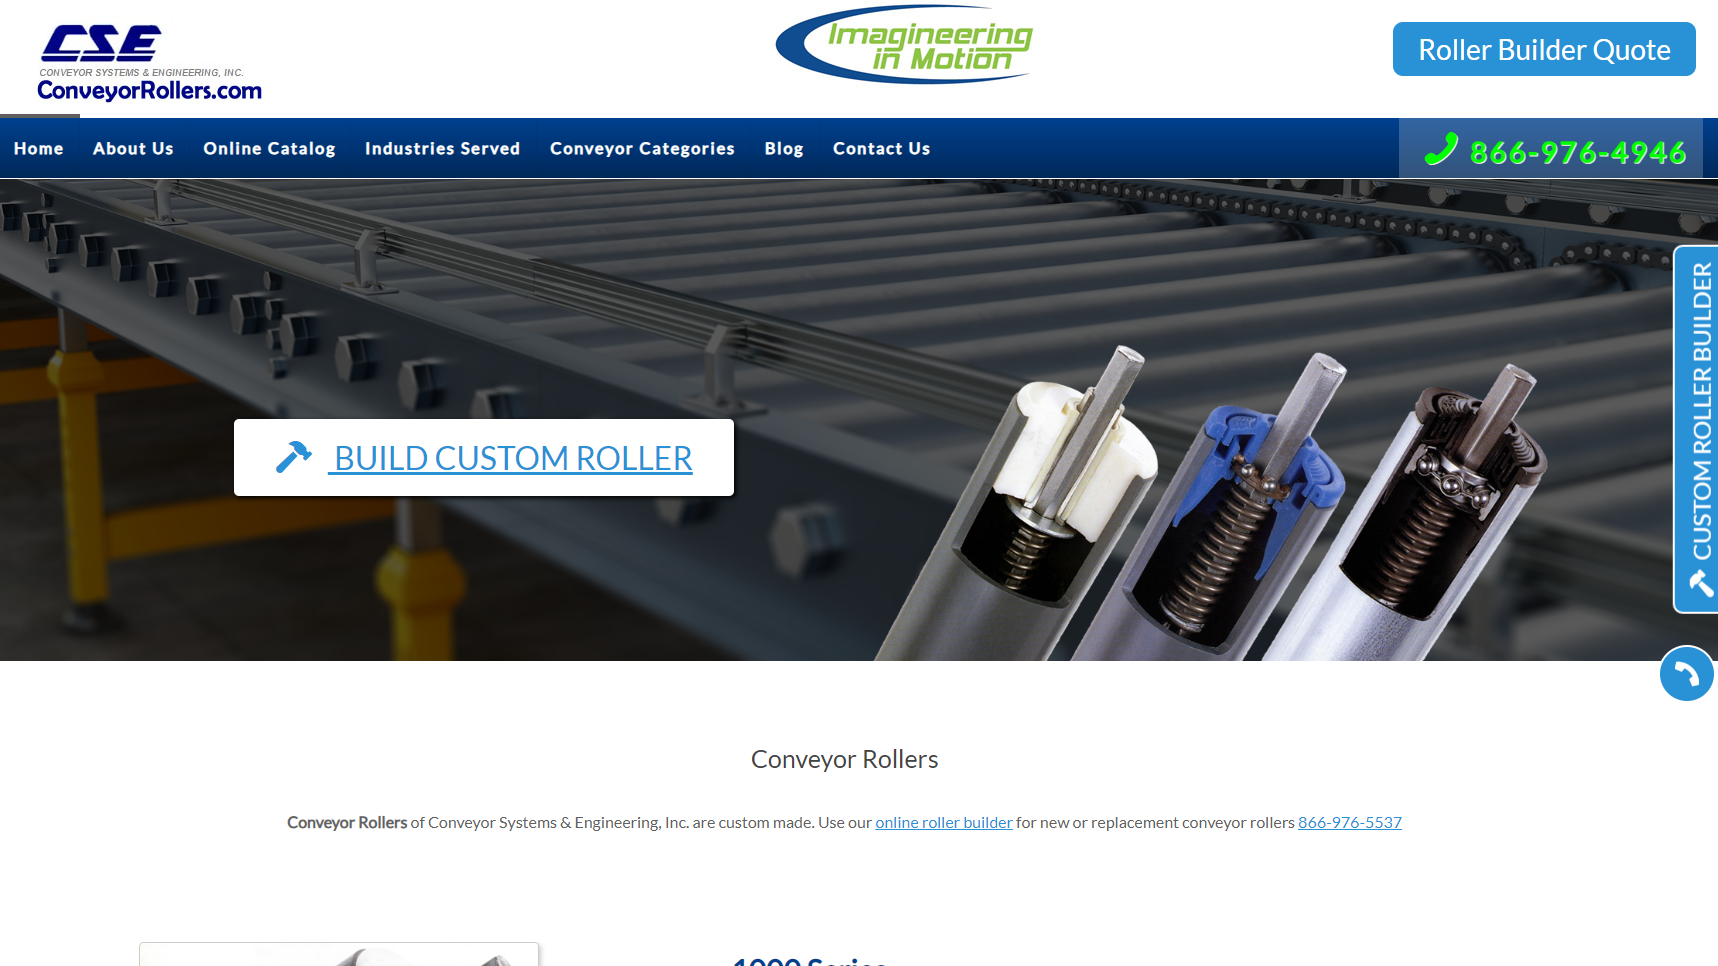 Conveyor Roller Manufacturers, Inc. (CRM) - Conveyor Roller Manufacturer